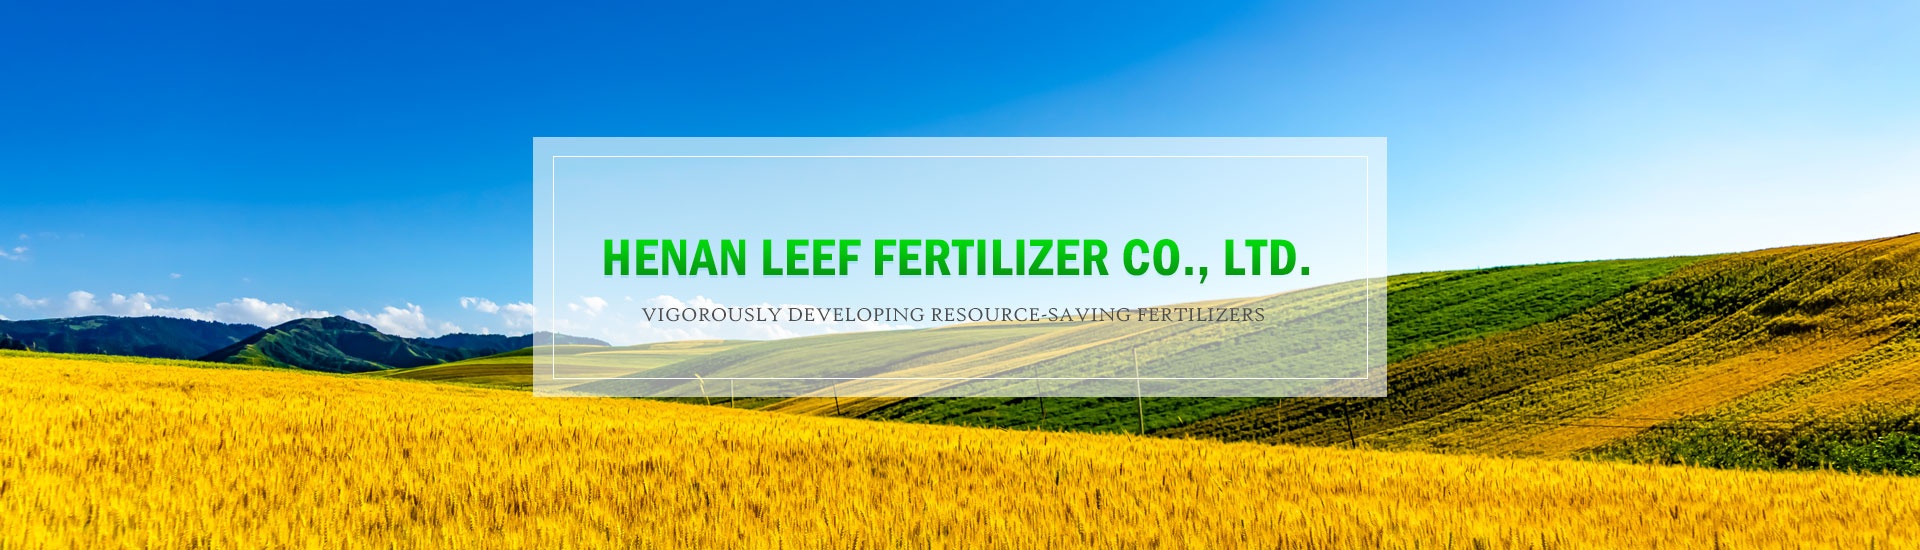 Functional fertilizer